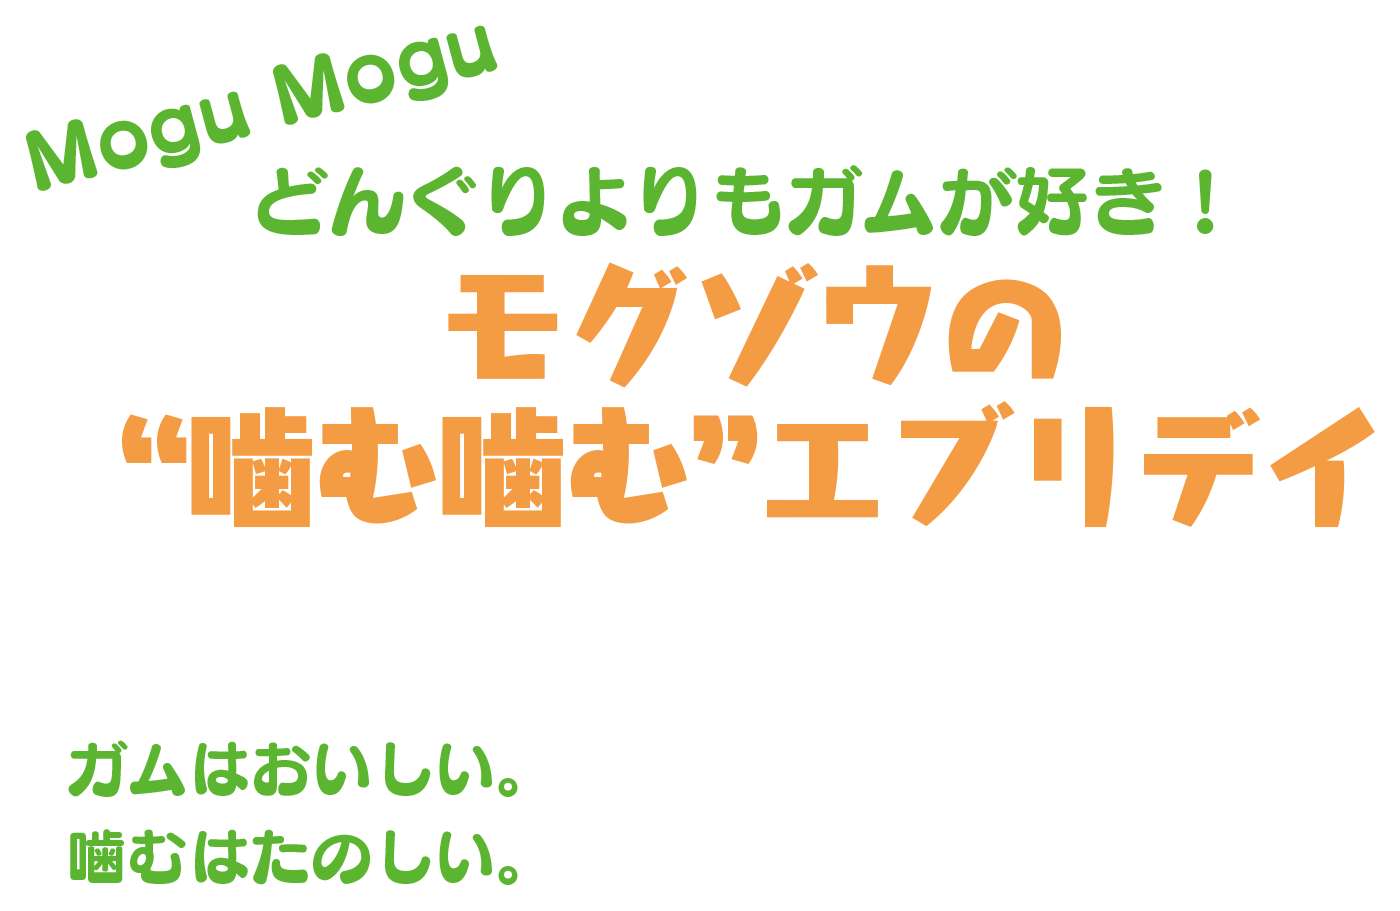 Mogu Mogu どんぐりよりもガムが好き！